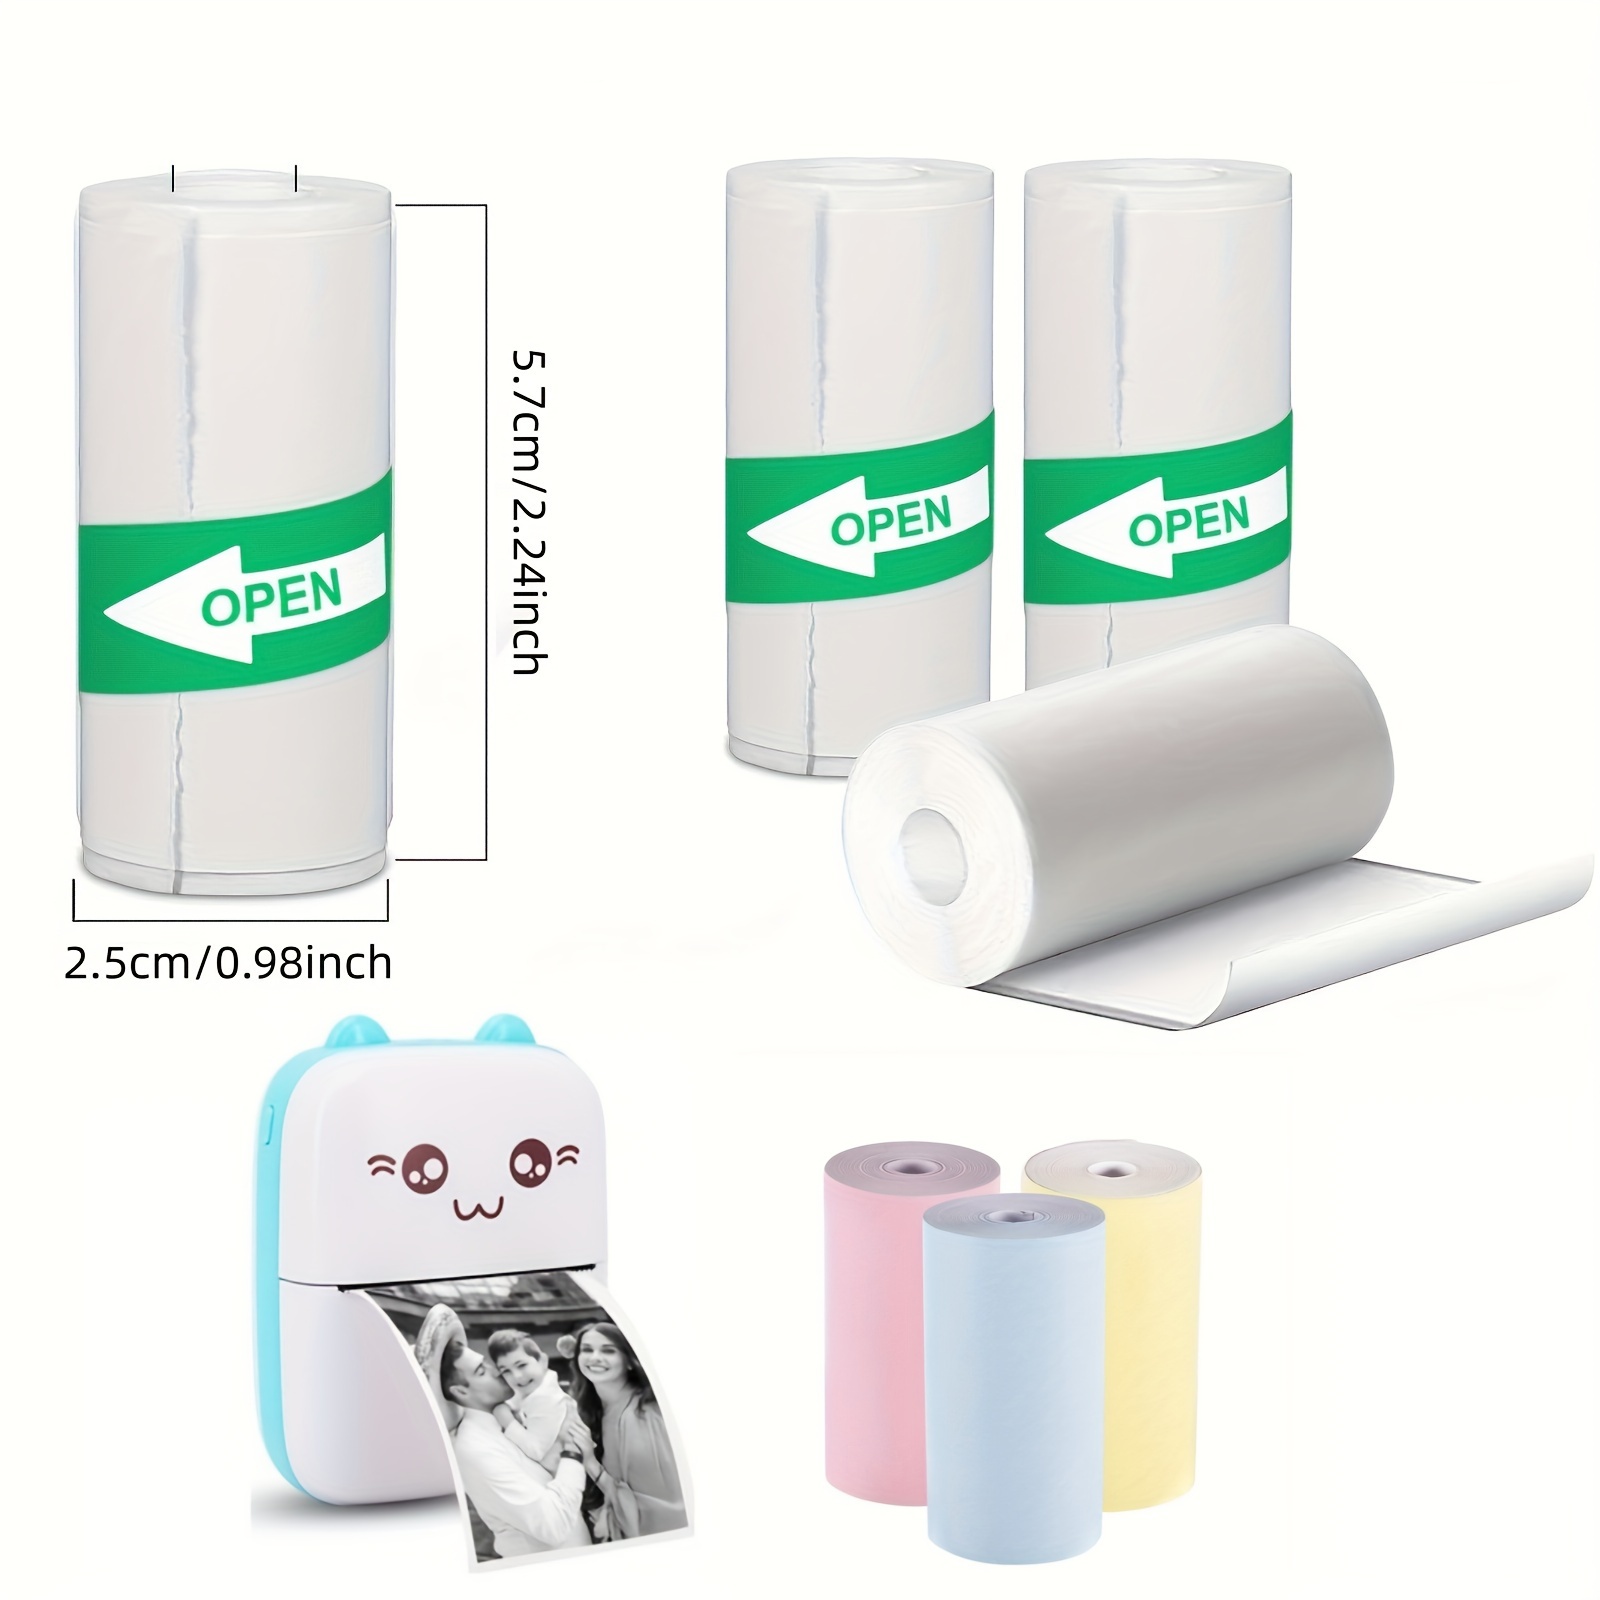 5 Rolls Thermal Printer Paper & 5 Rolls Self-Adhesive Stickers